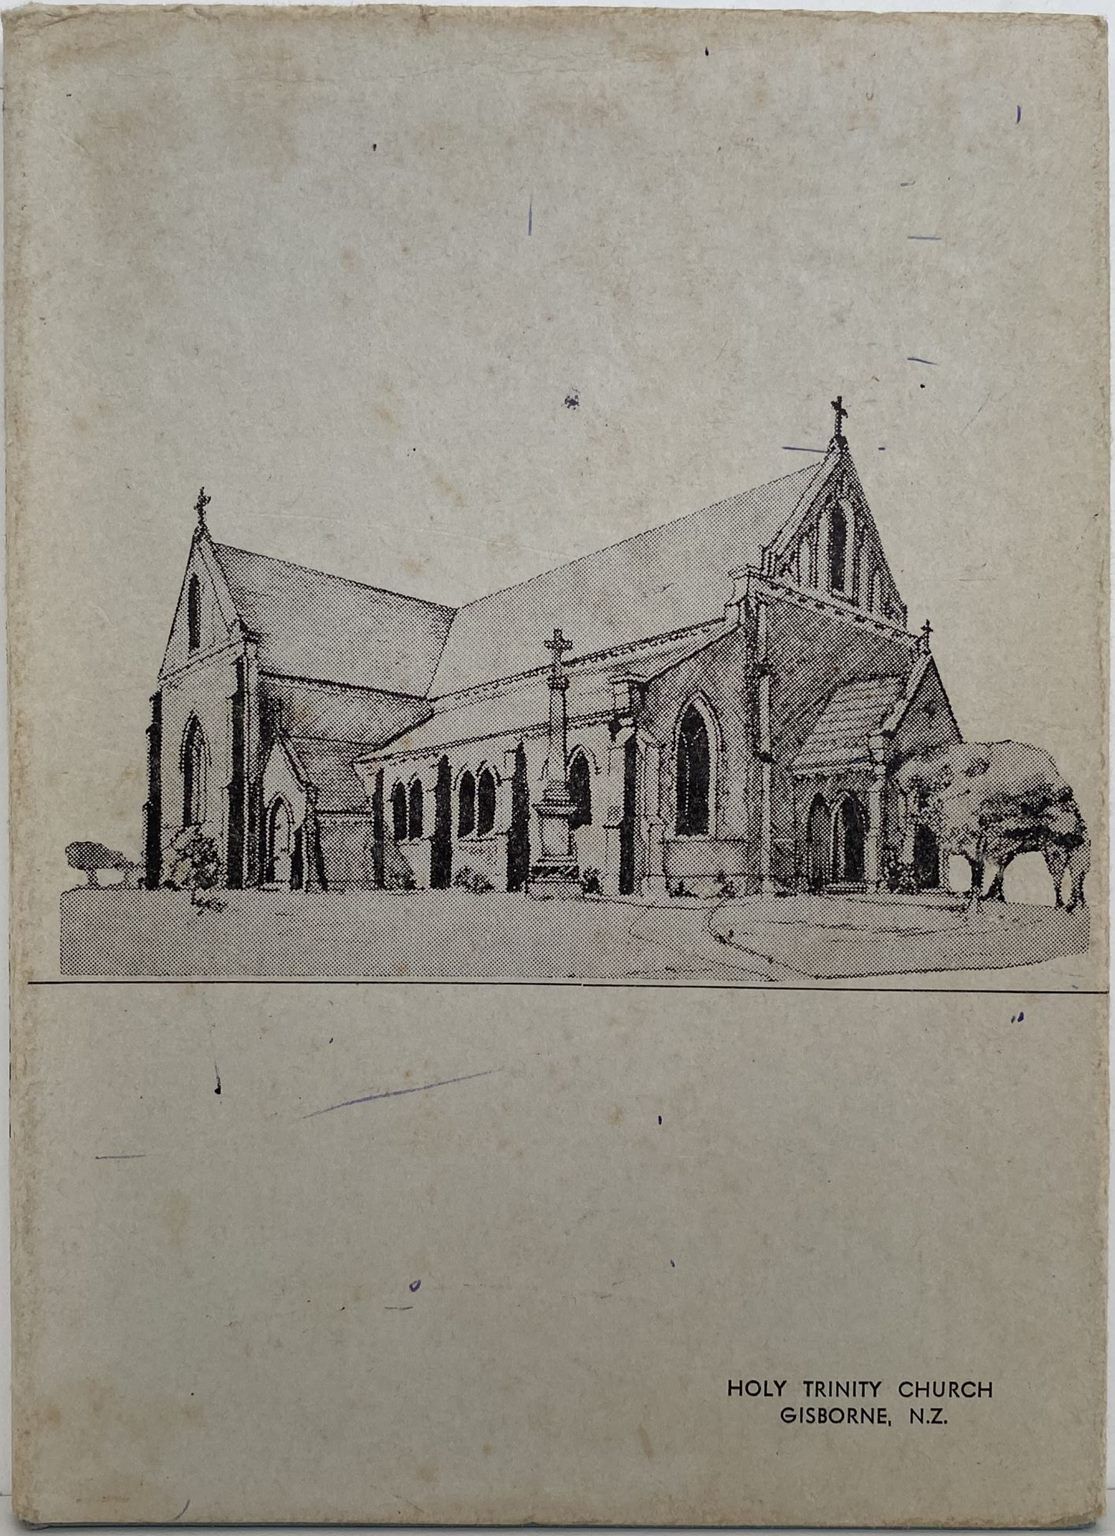 A History of the Parish of Gisborne